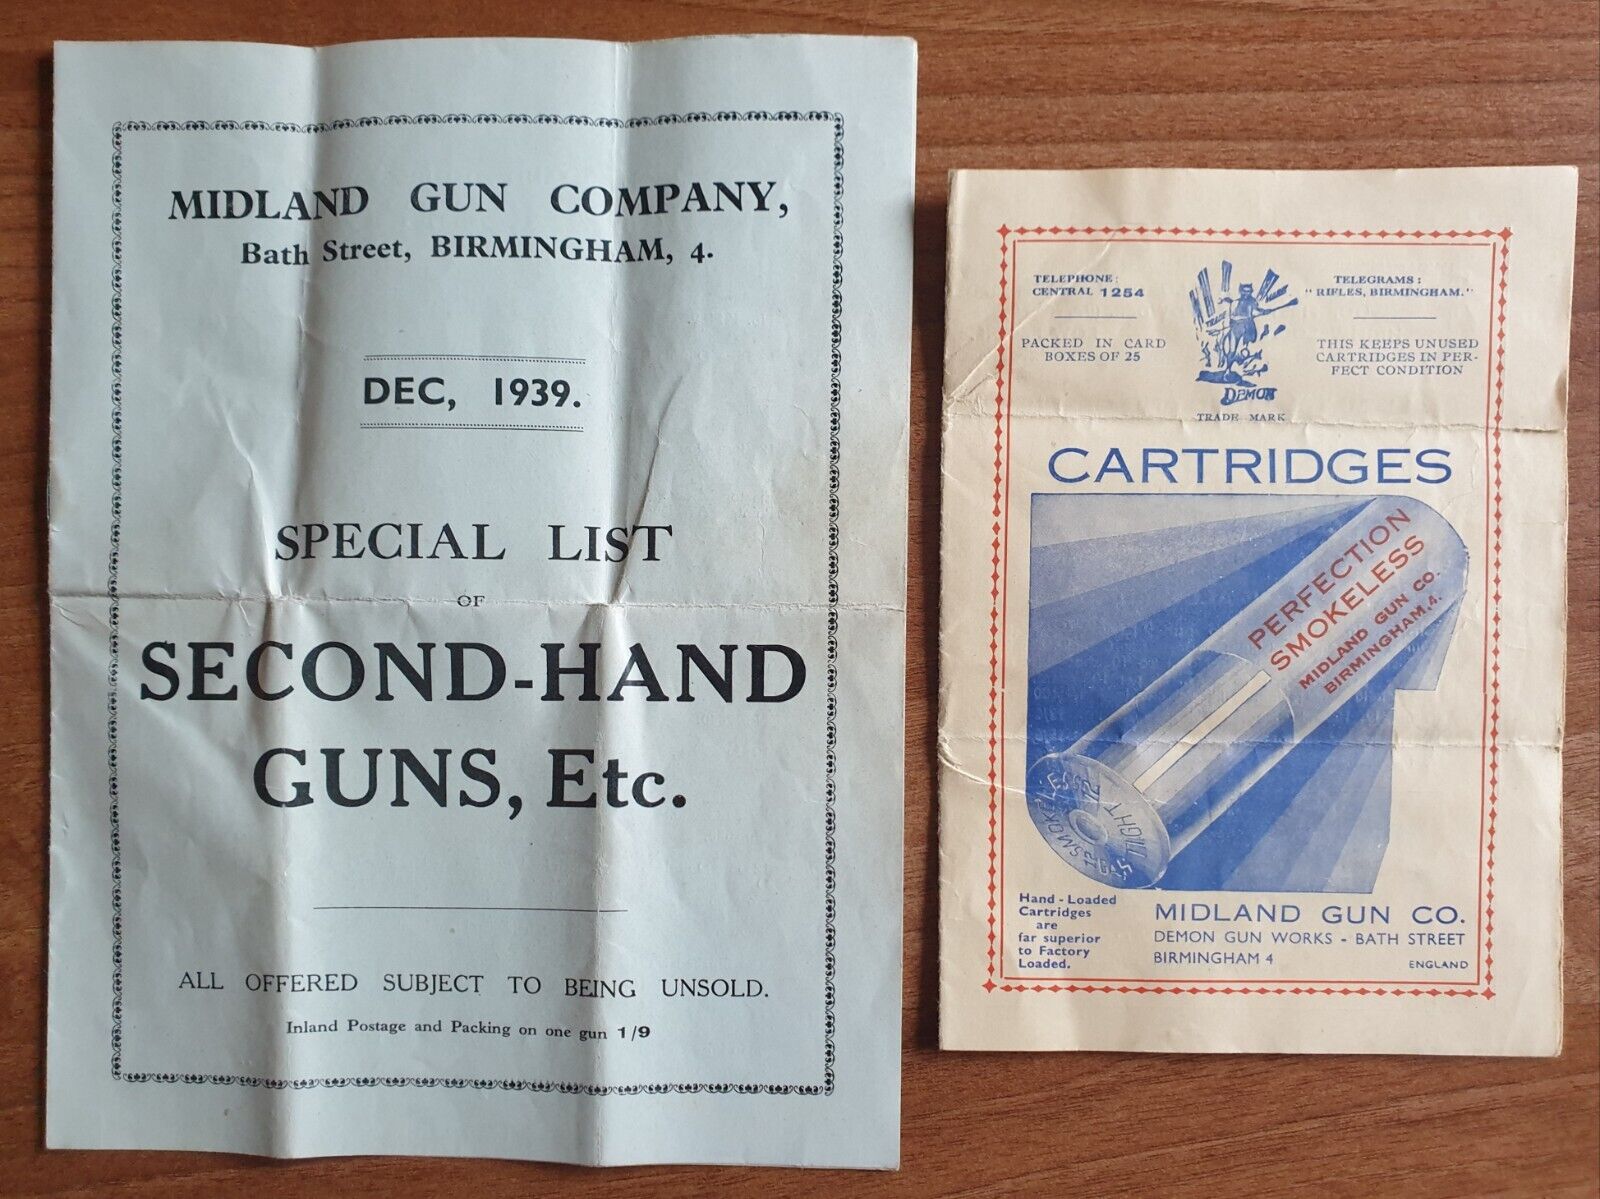 Rare 1939 Midland Gun Co. Firearms & Cartridges Catalogs - WWII Memorabilia